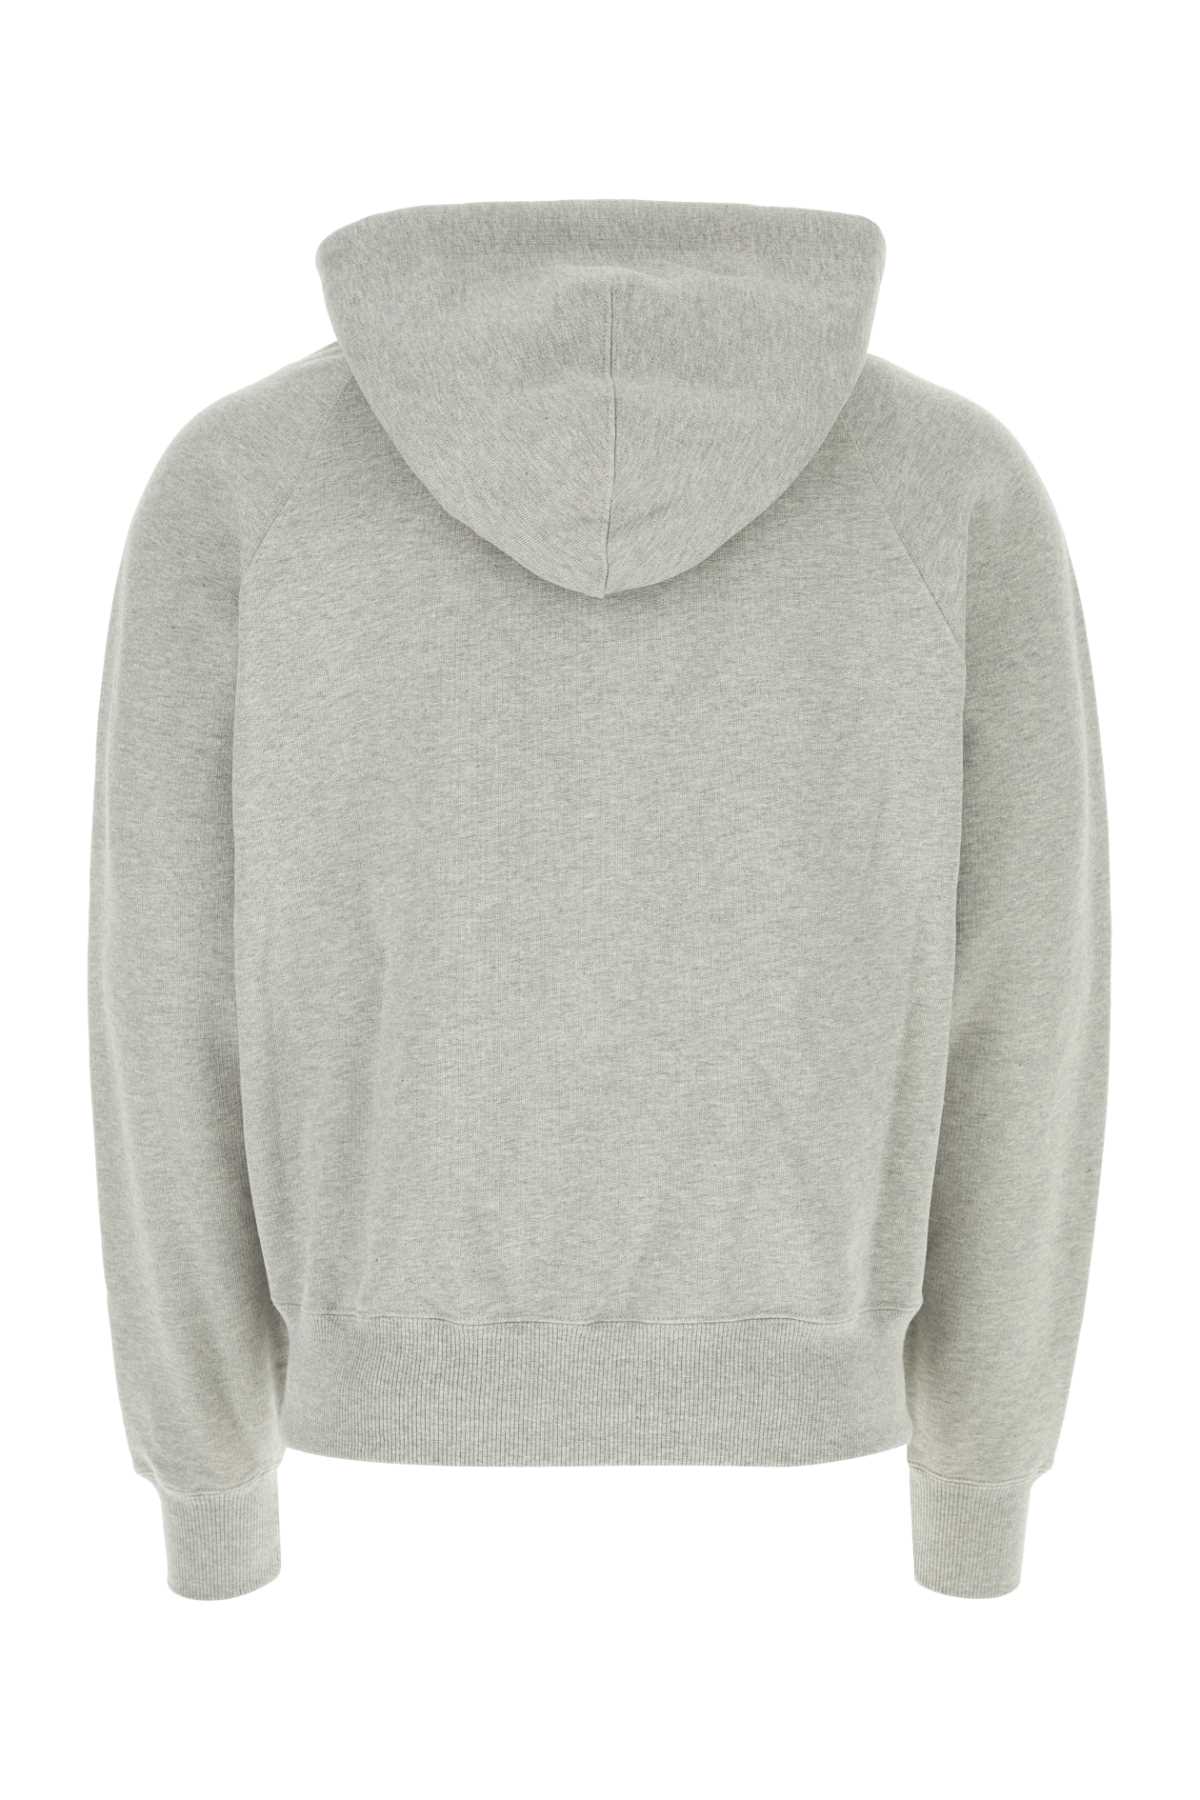 Ami Alexandre Mattiussi Melange Grey Stretch Cotton Sweatshirt In Heatherashgrey